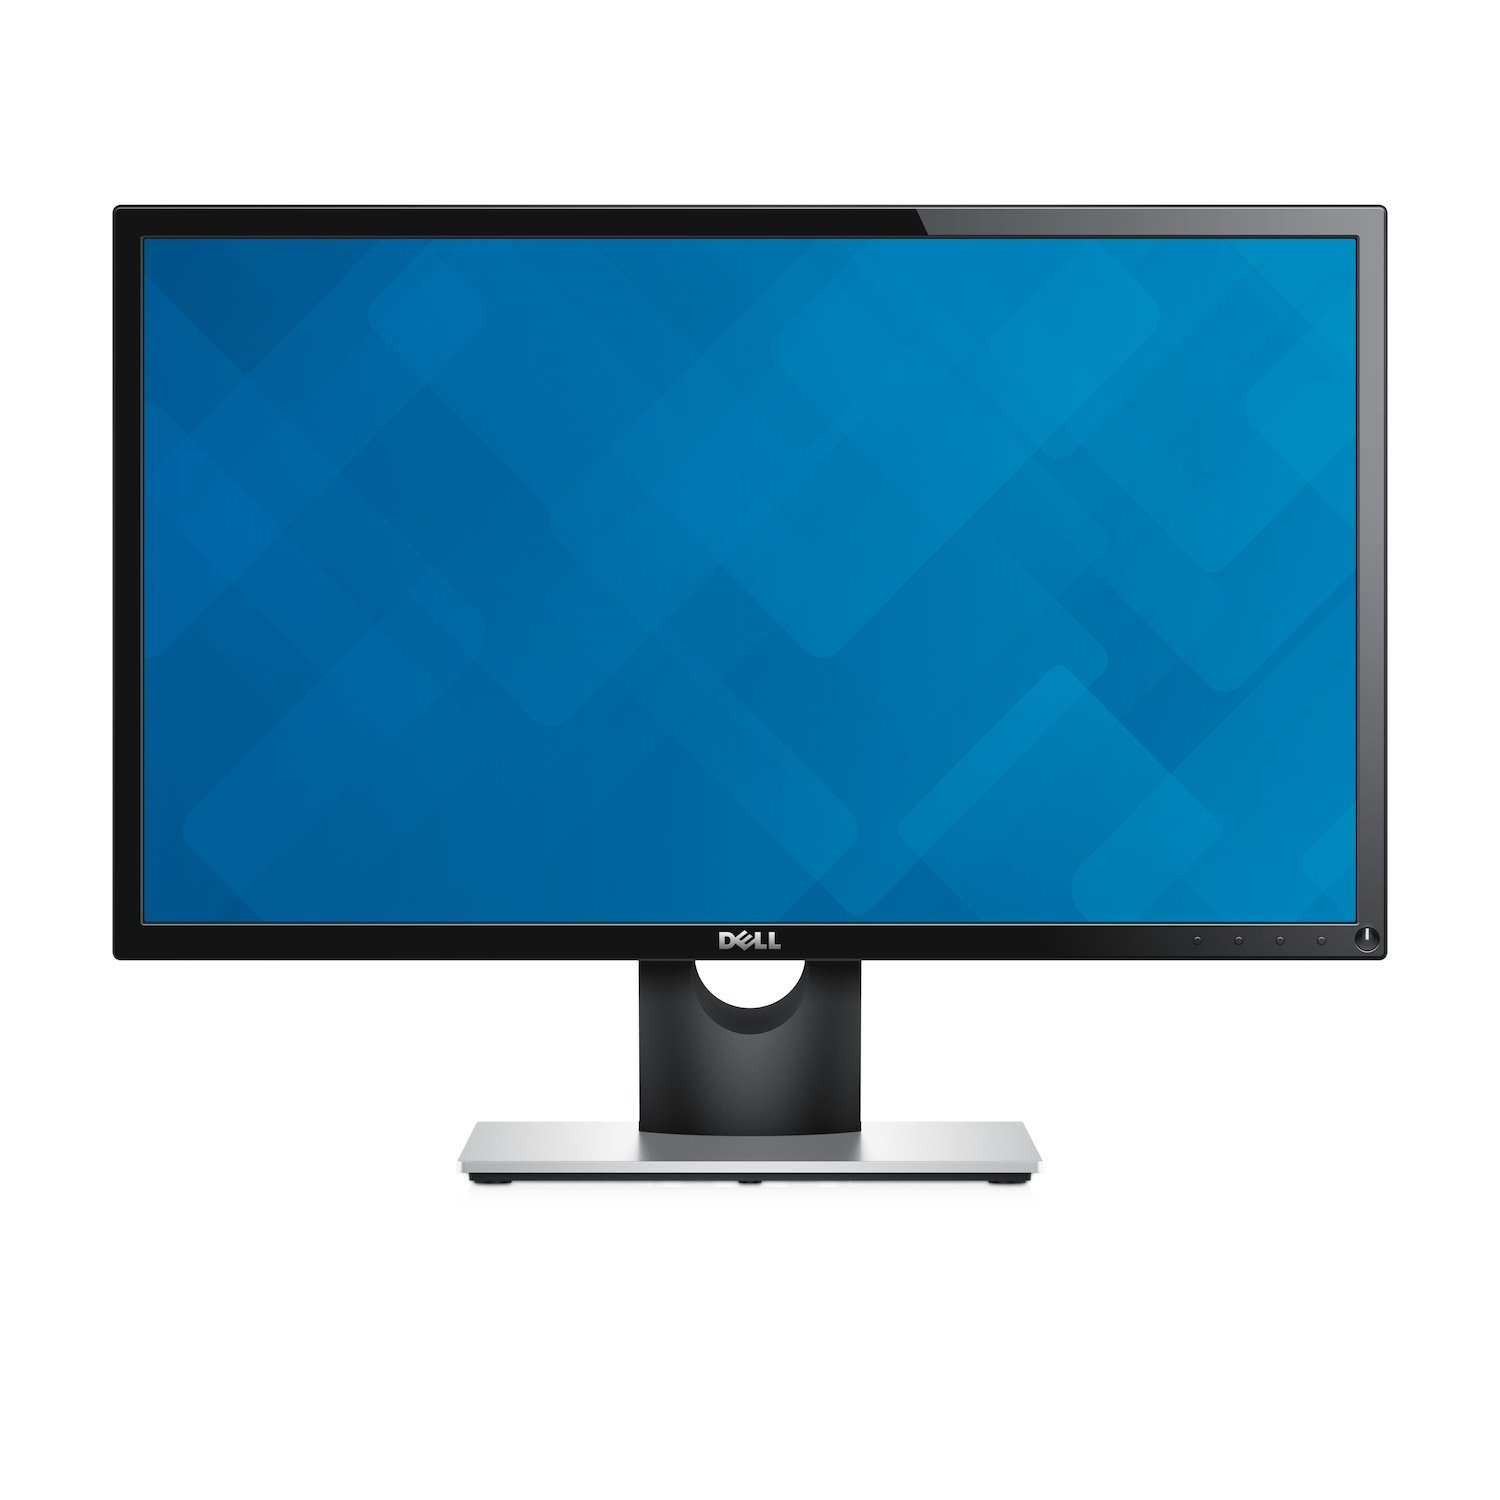 Dell SE2416H Full HD LCD Monitor - 16:9 - Black, Silver